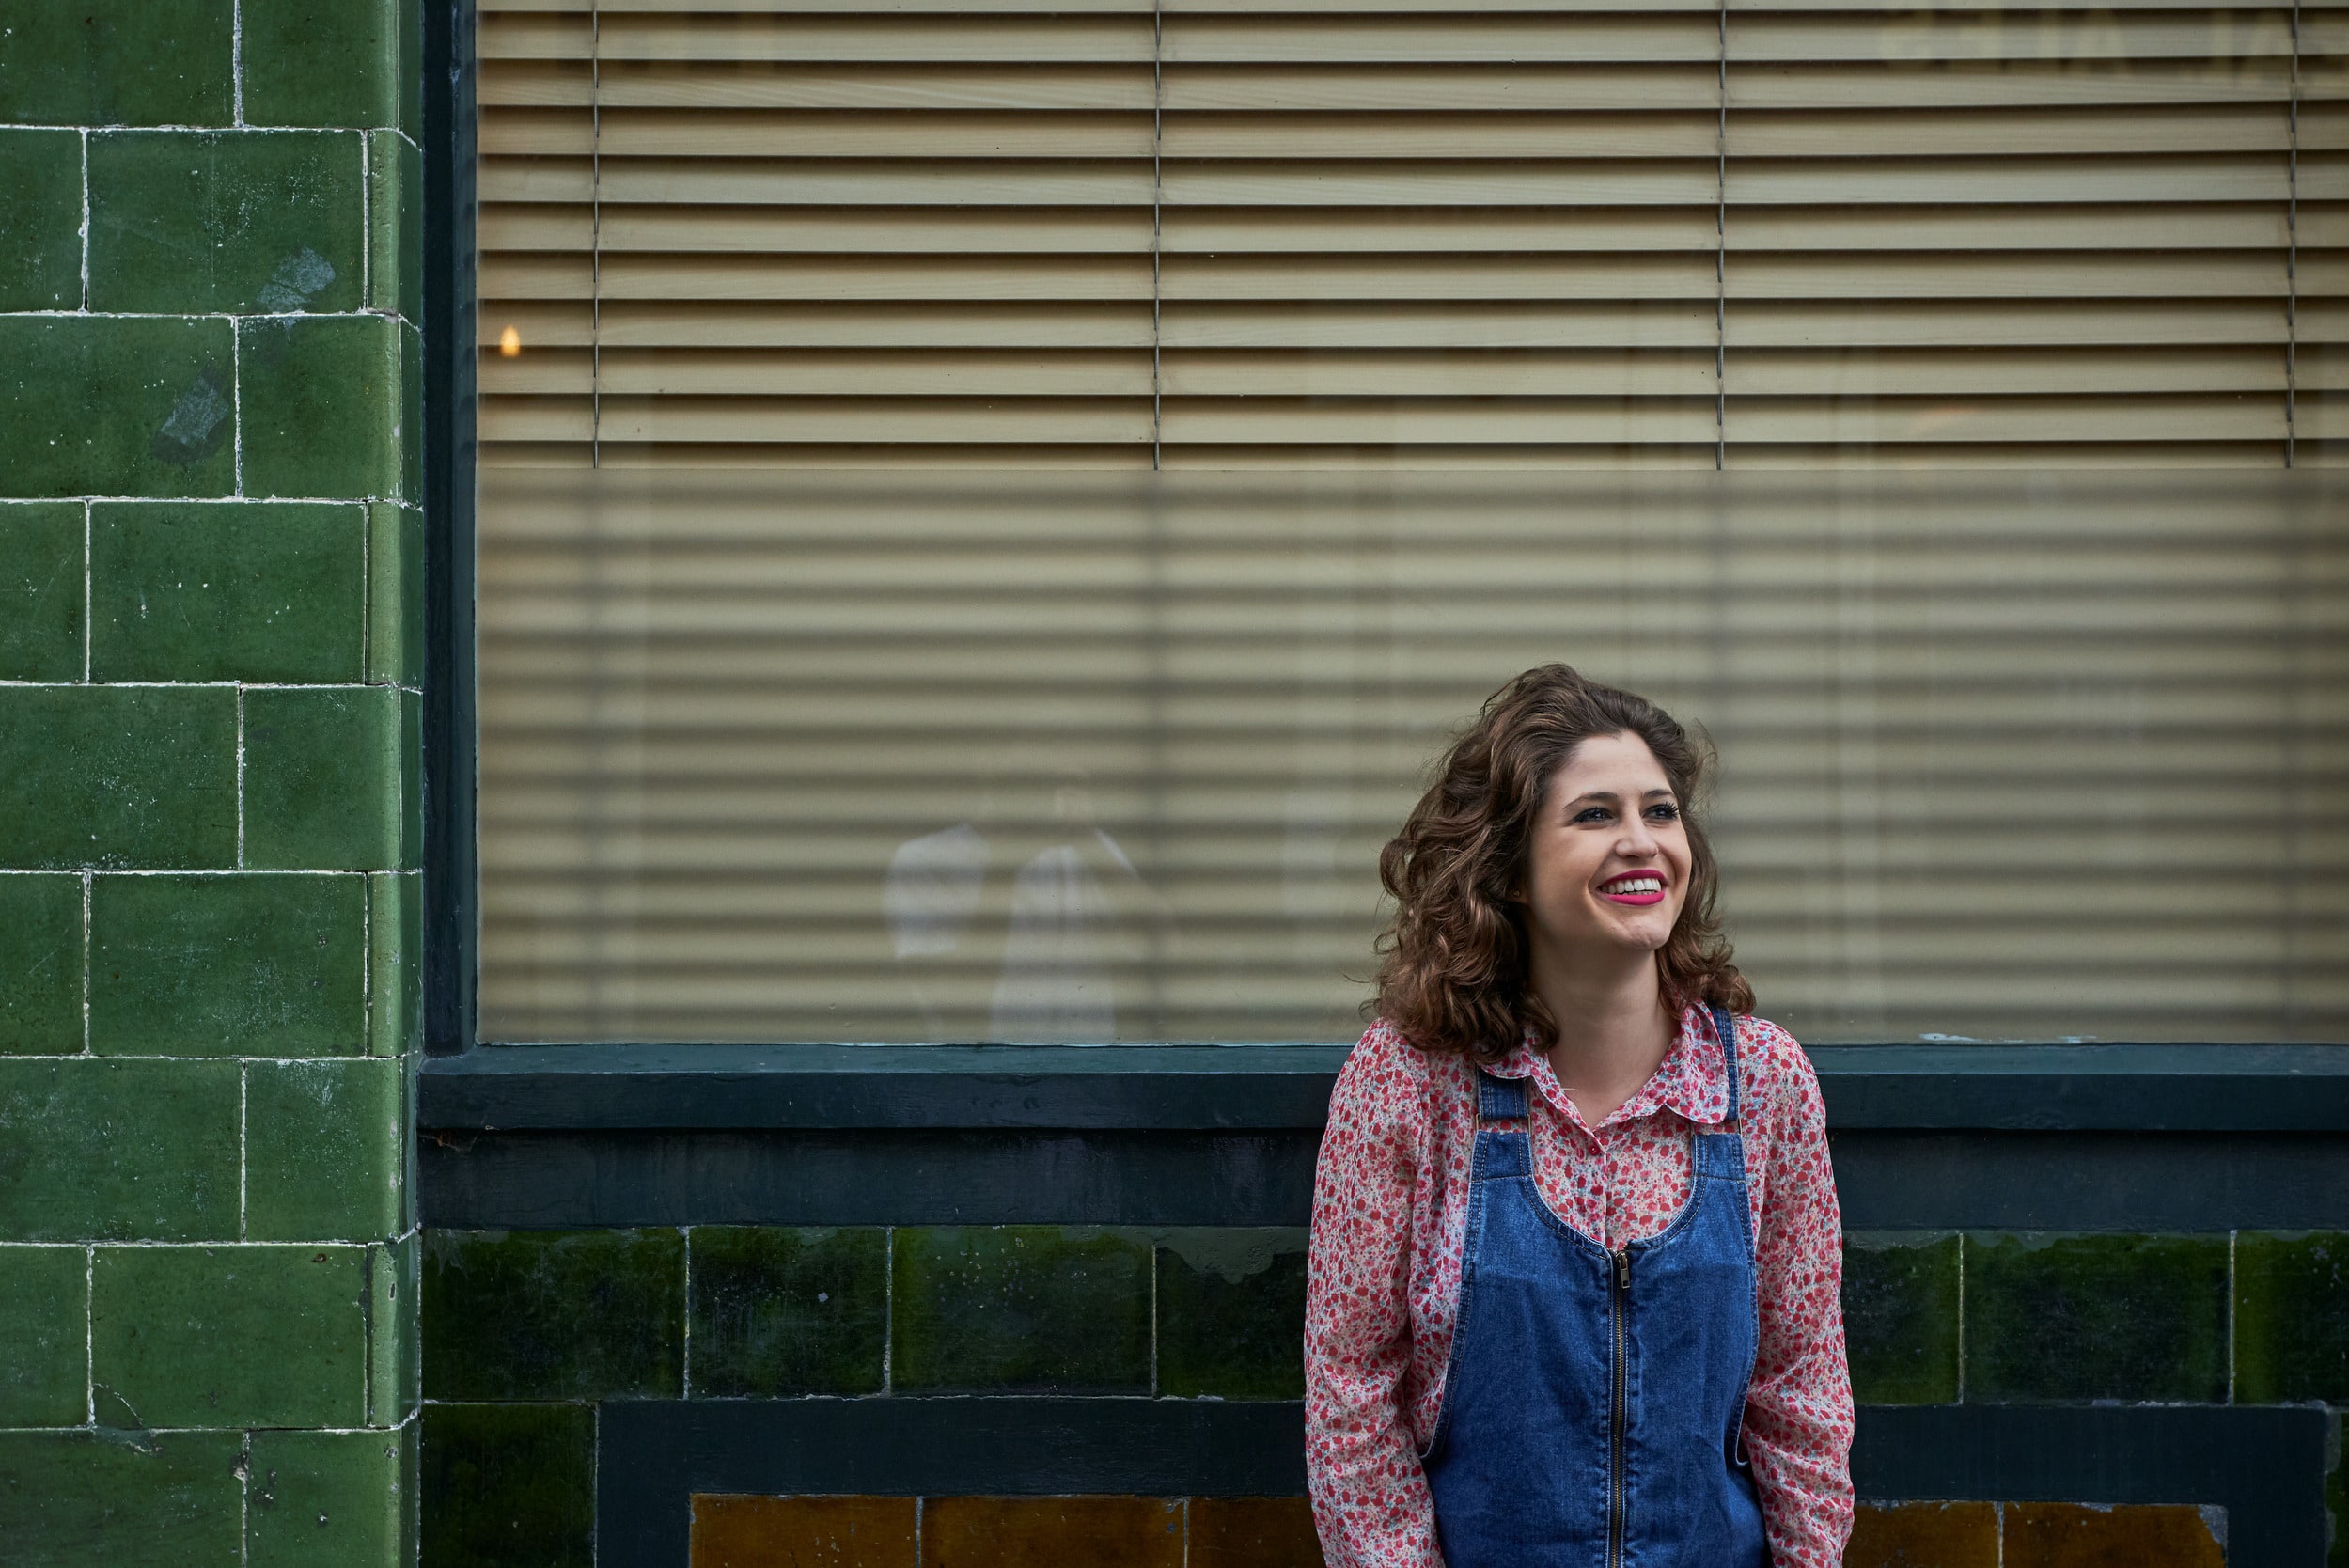 A woman smiling outside a window